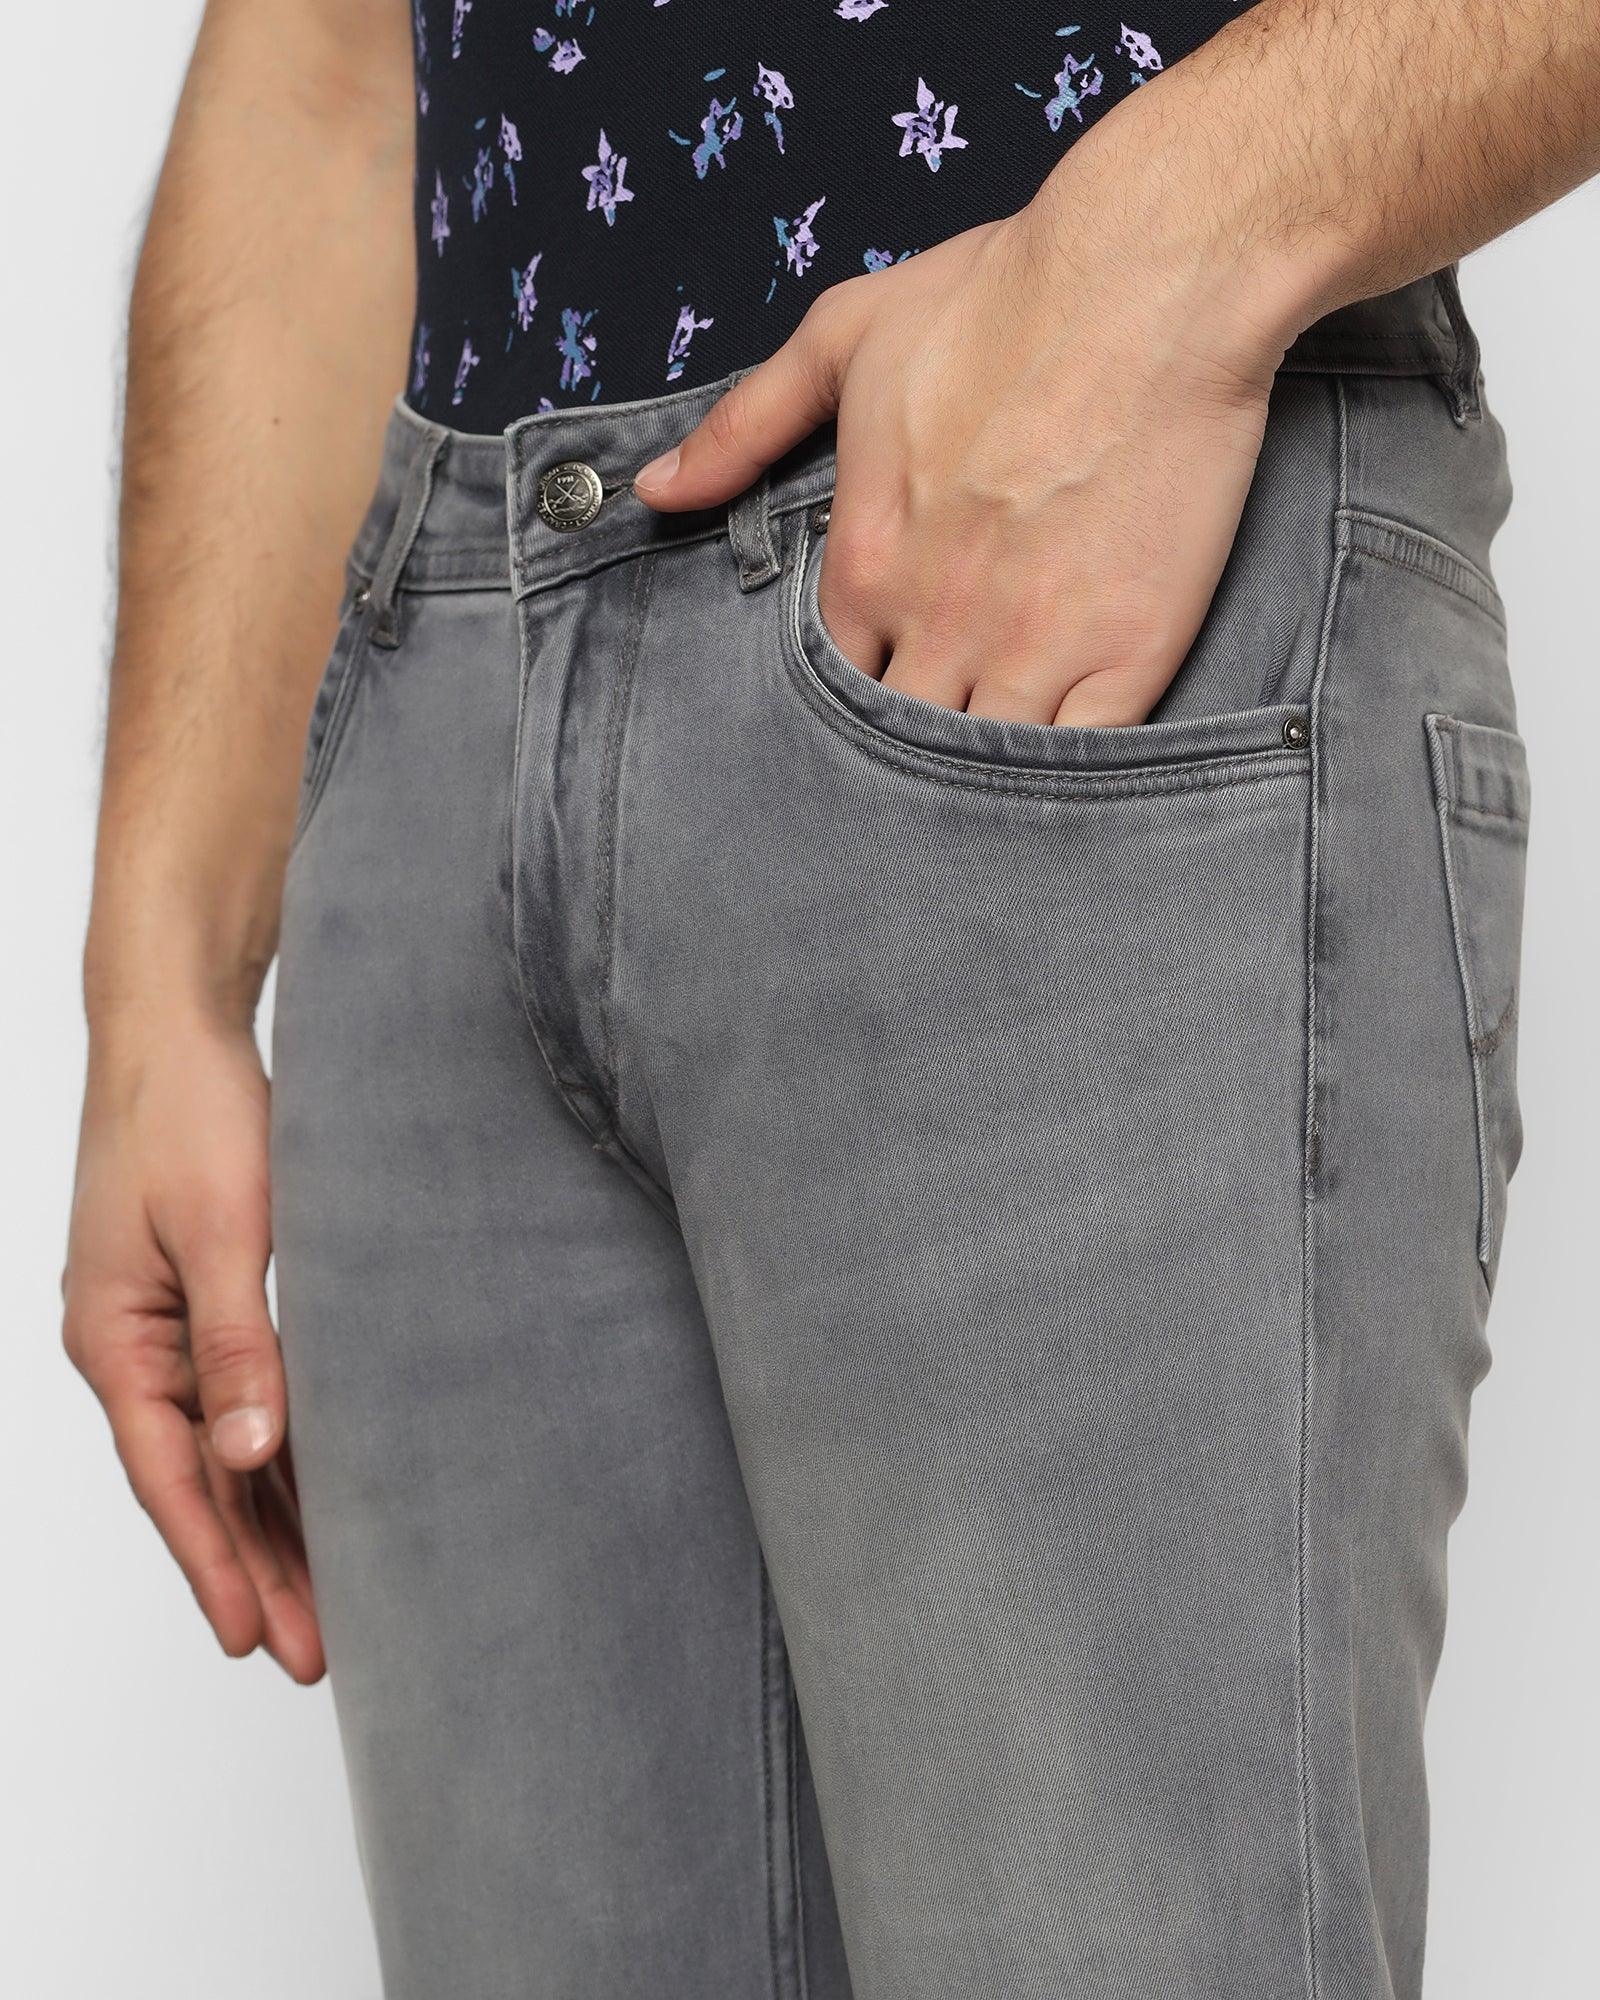 Slim Comfort Buff Fit Grey Jeans - Nico